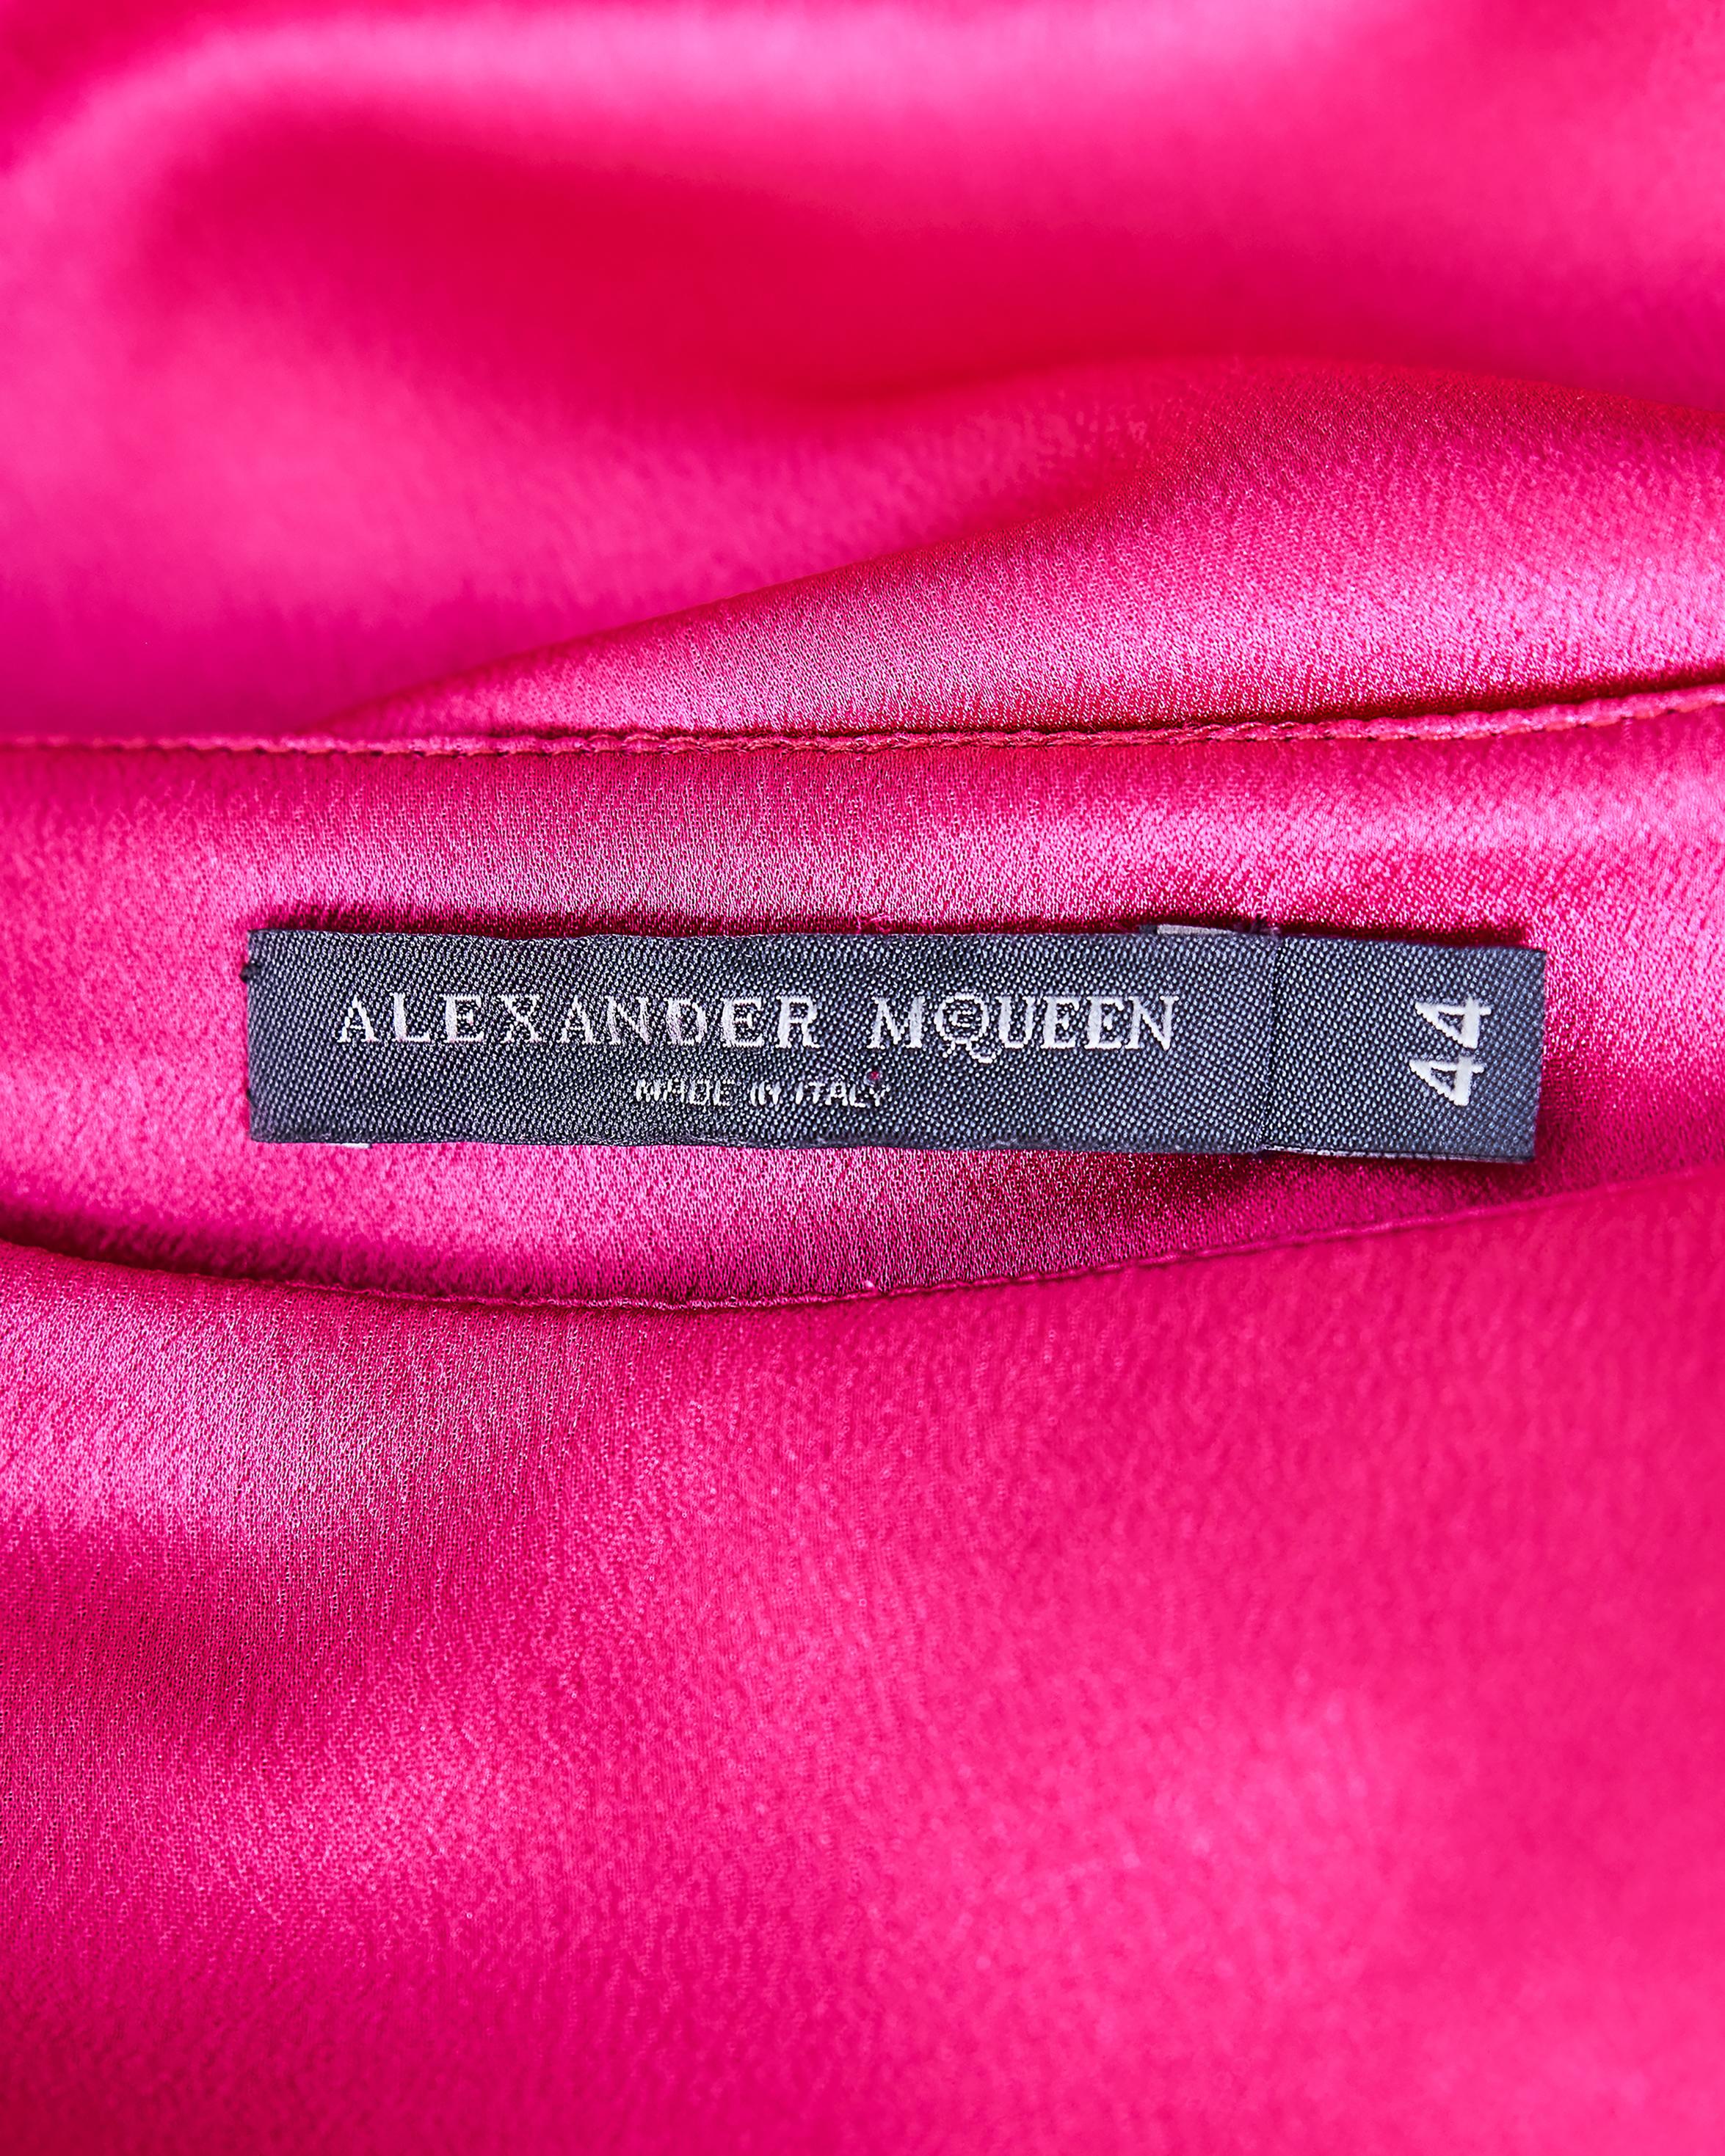 Women's S/S 2008 Alexander McQueen Hot Pink Silk Charmeuse Asymmetrical Midi Dress